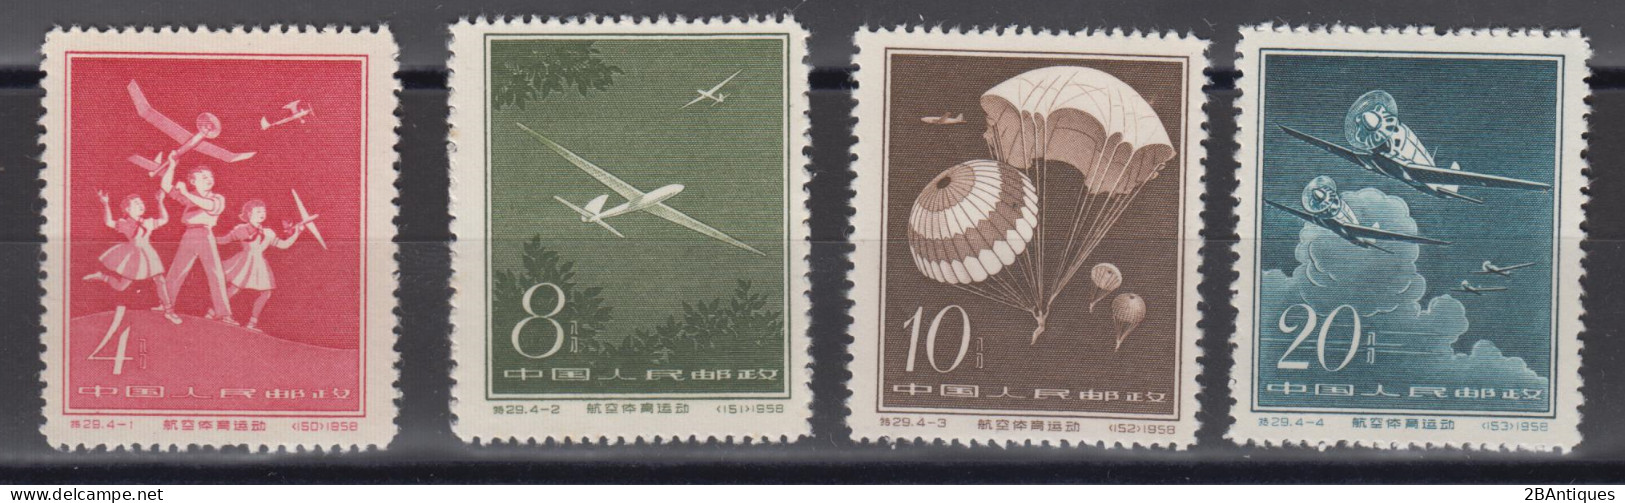 PR CHINA 1958 - Aviation Sports MNH** XF - Unused Stamps